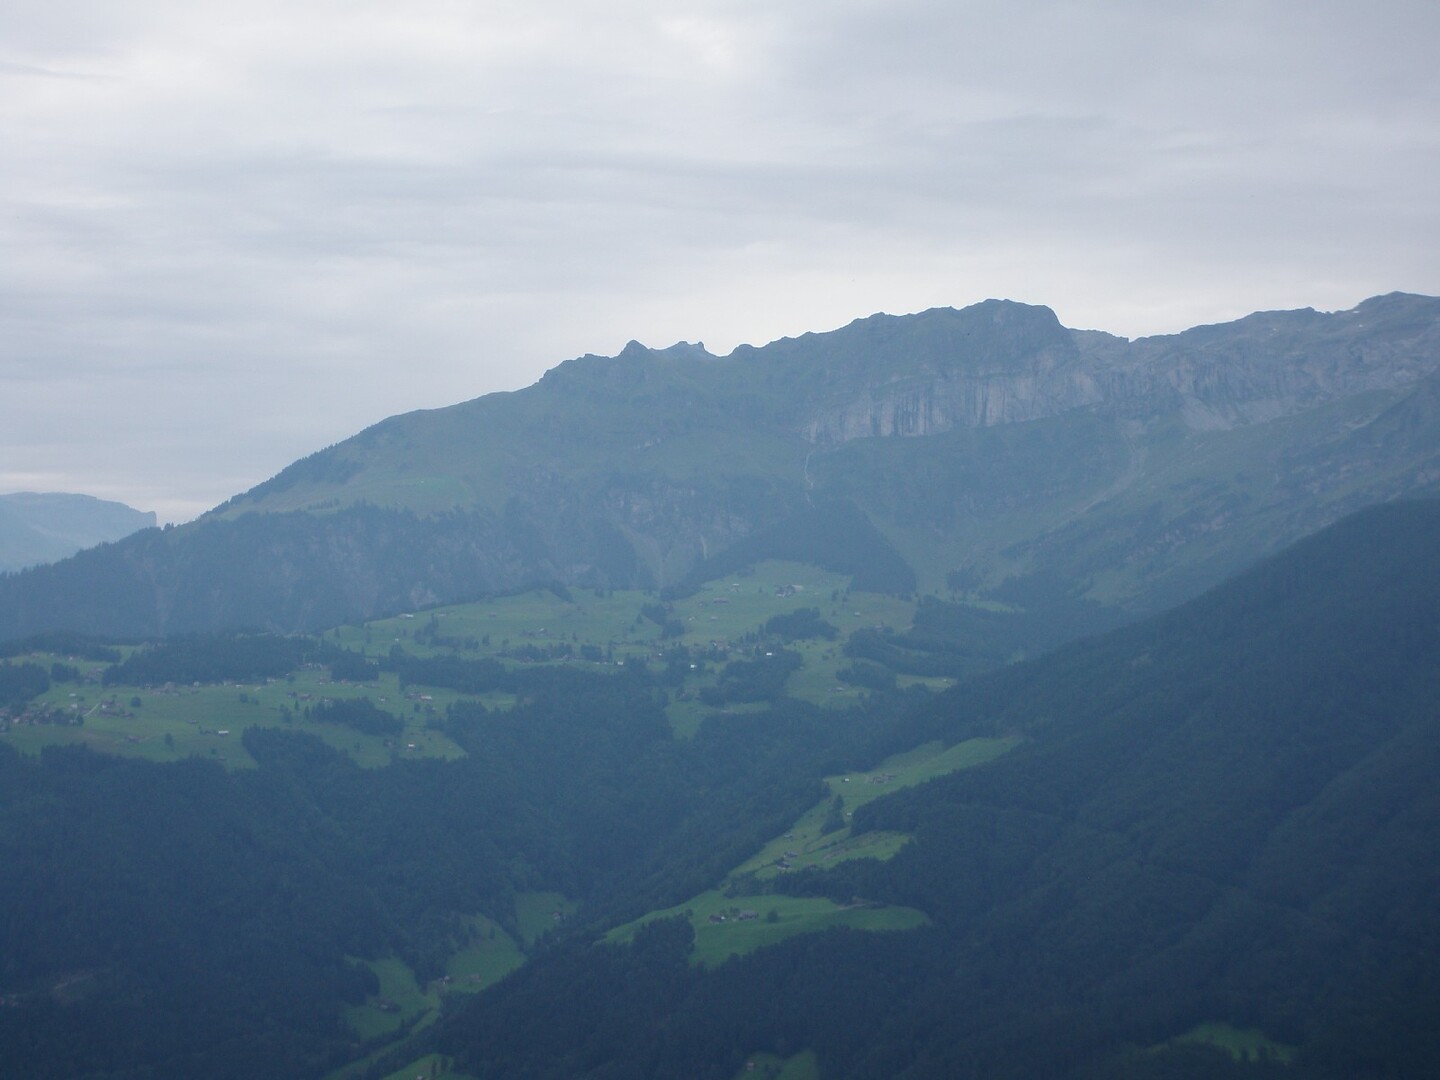 Am gegenüberliegenden Hang liegt Schattdorfer Bergen